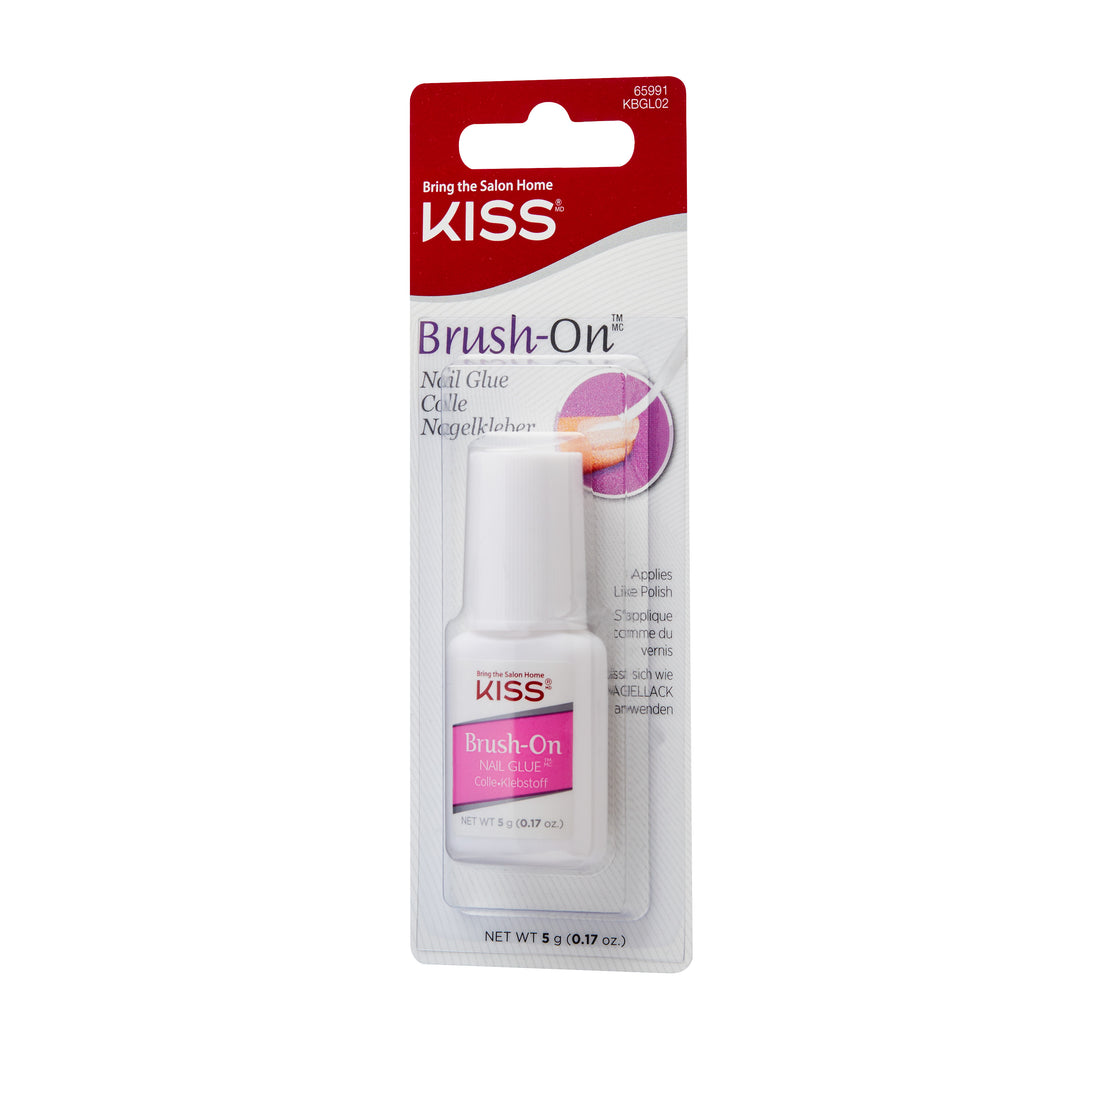 KISS Brush-On Nail Glue, Net Wt. 5g (0.17 oz.)